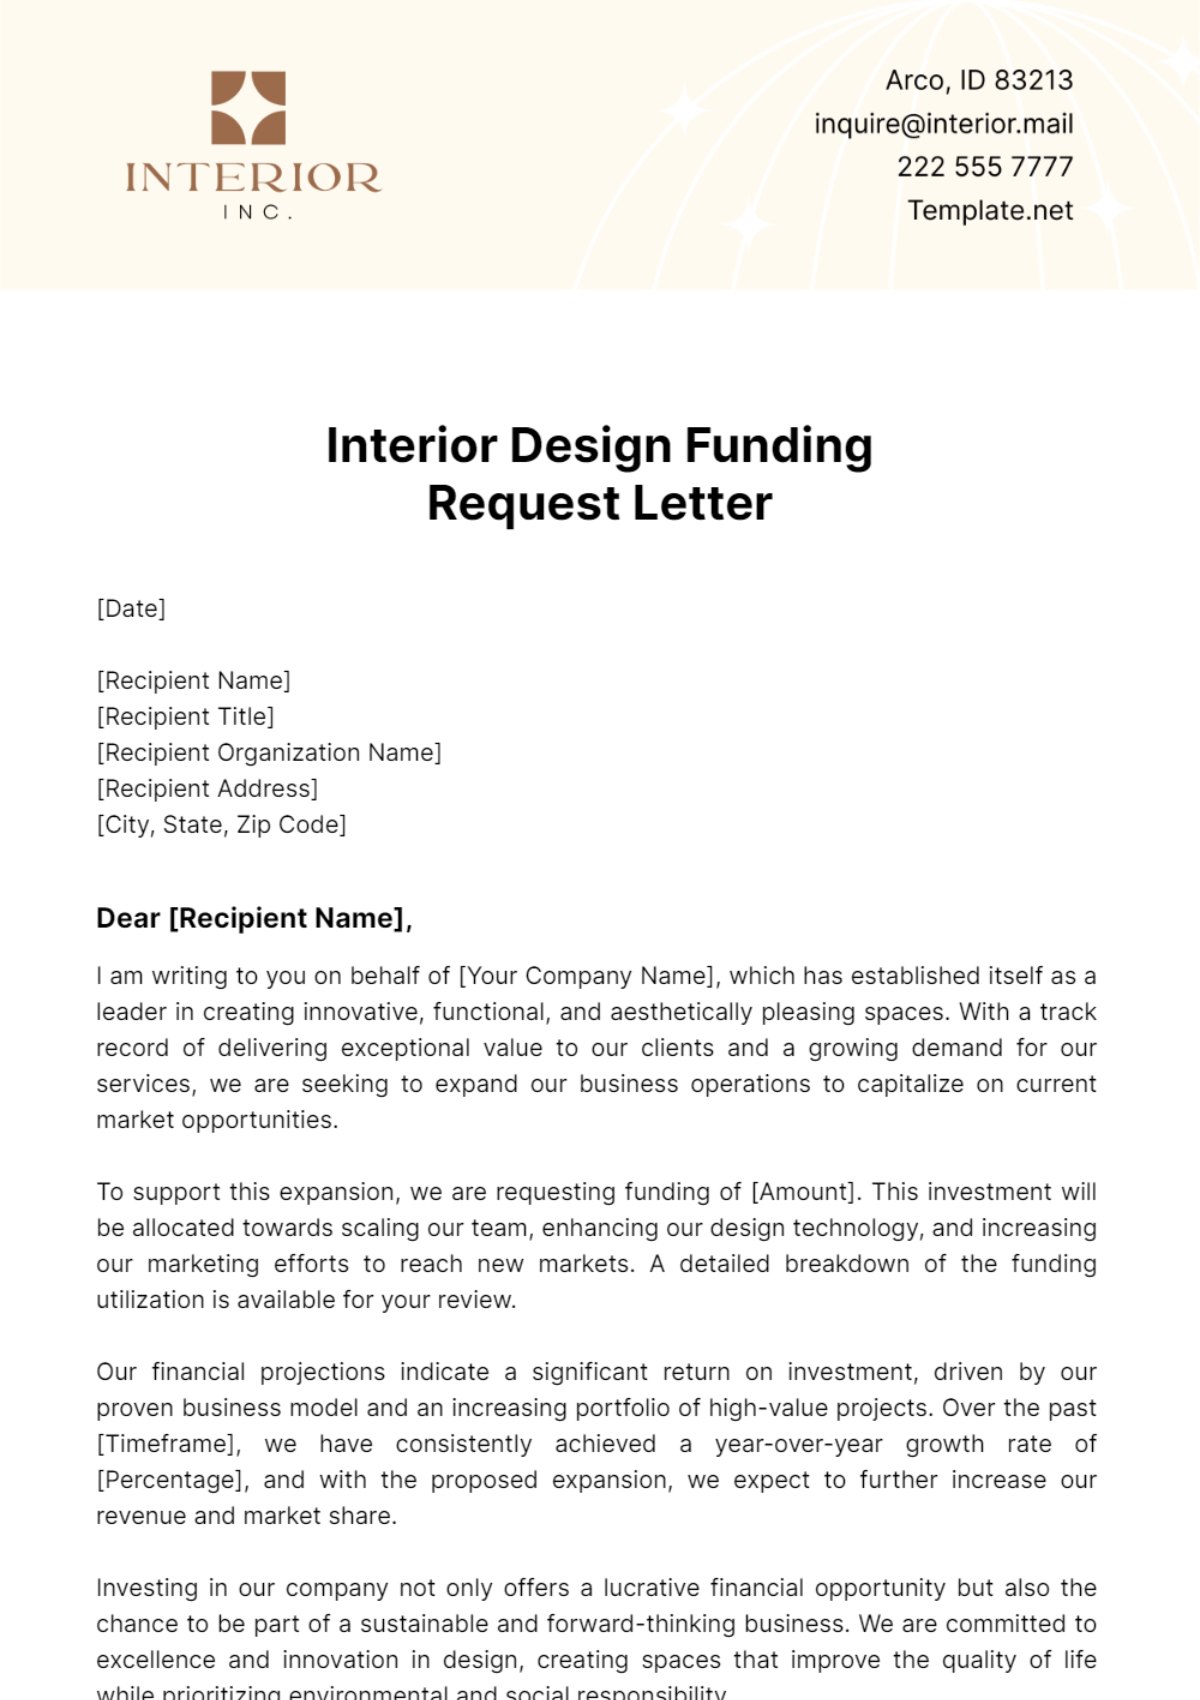 Interior Design Funding Request Letter Template